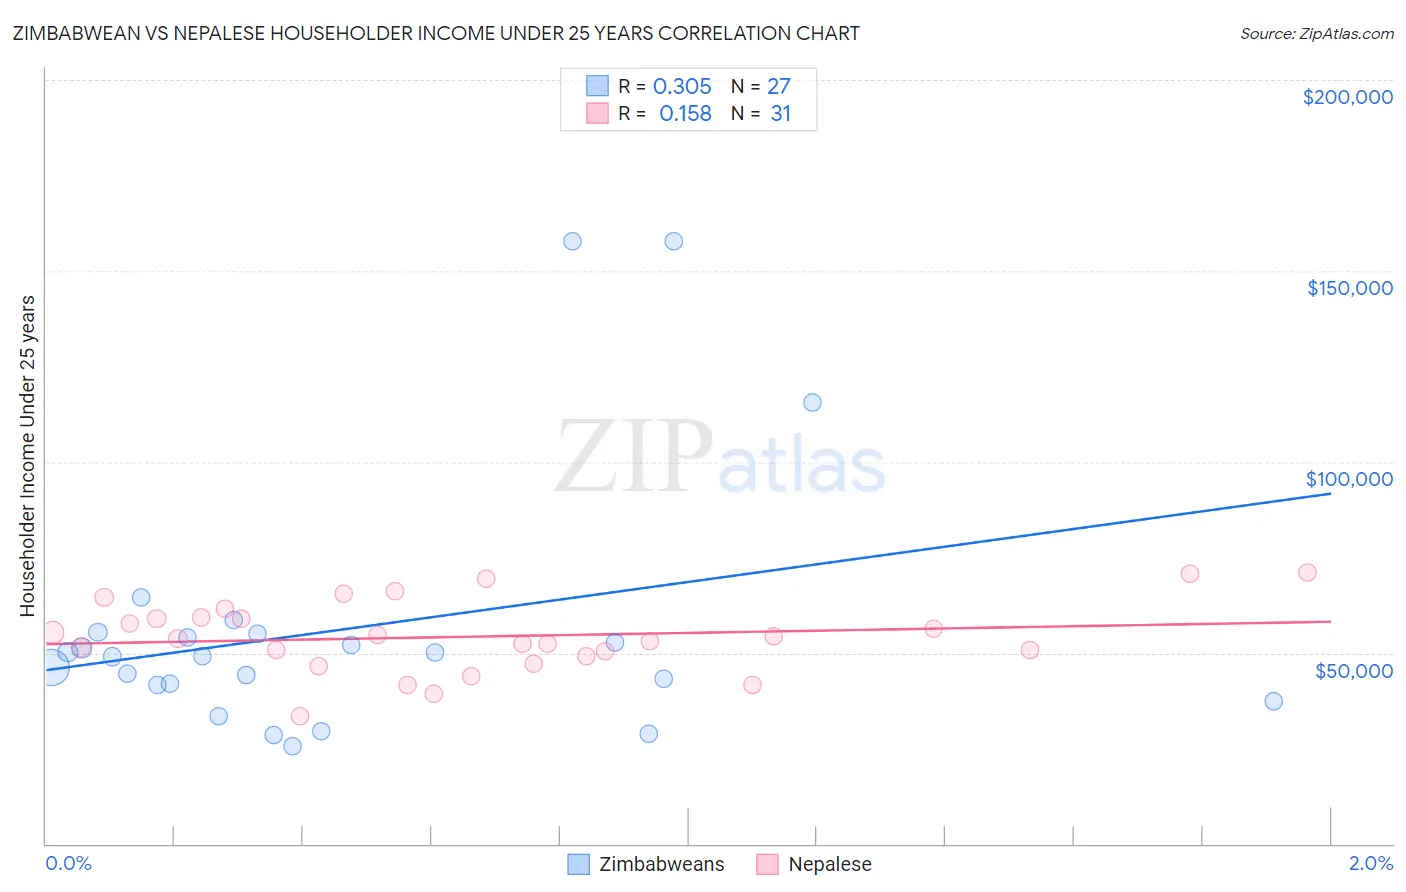 Zimbabwean vs Nepalese Householder Income Under 25 years